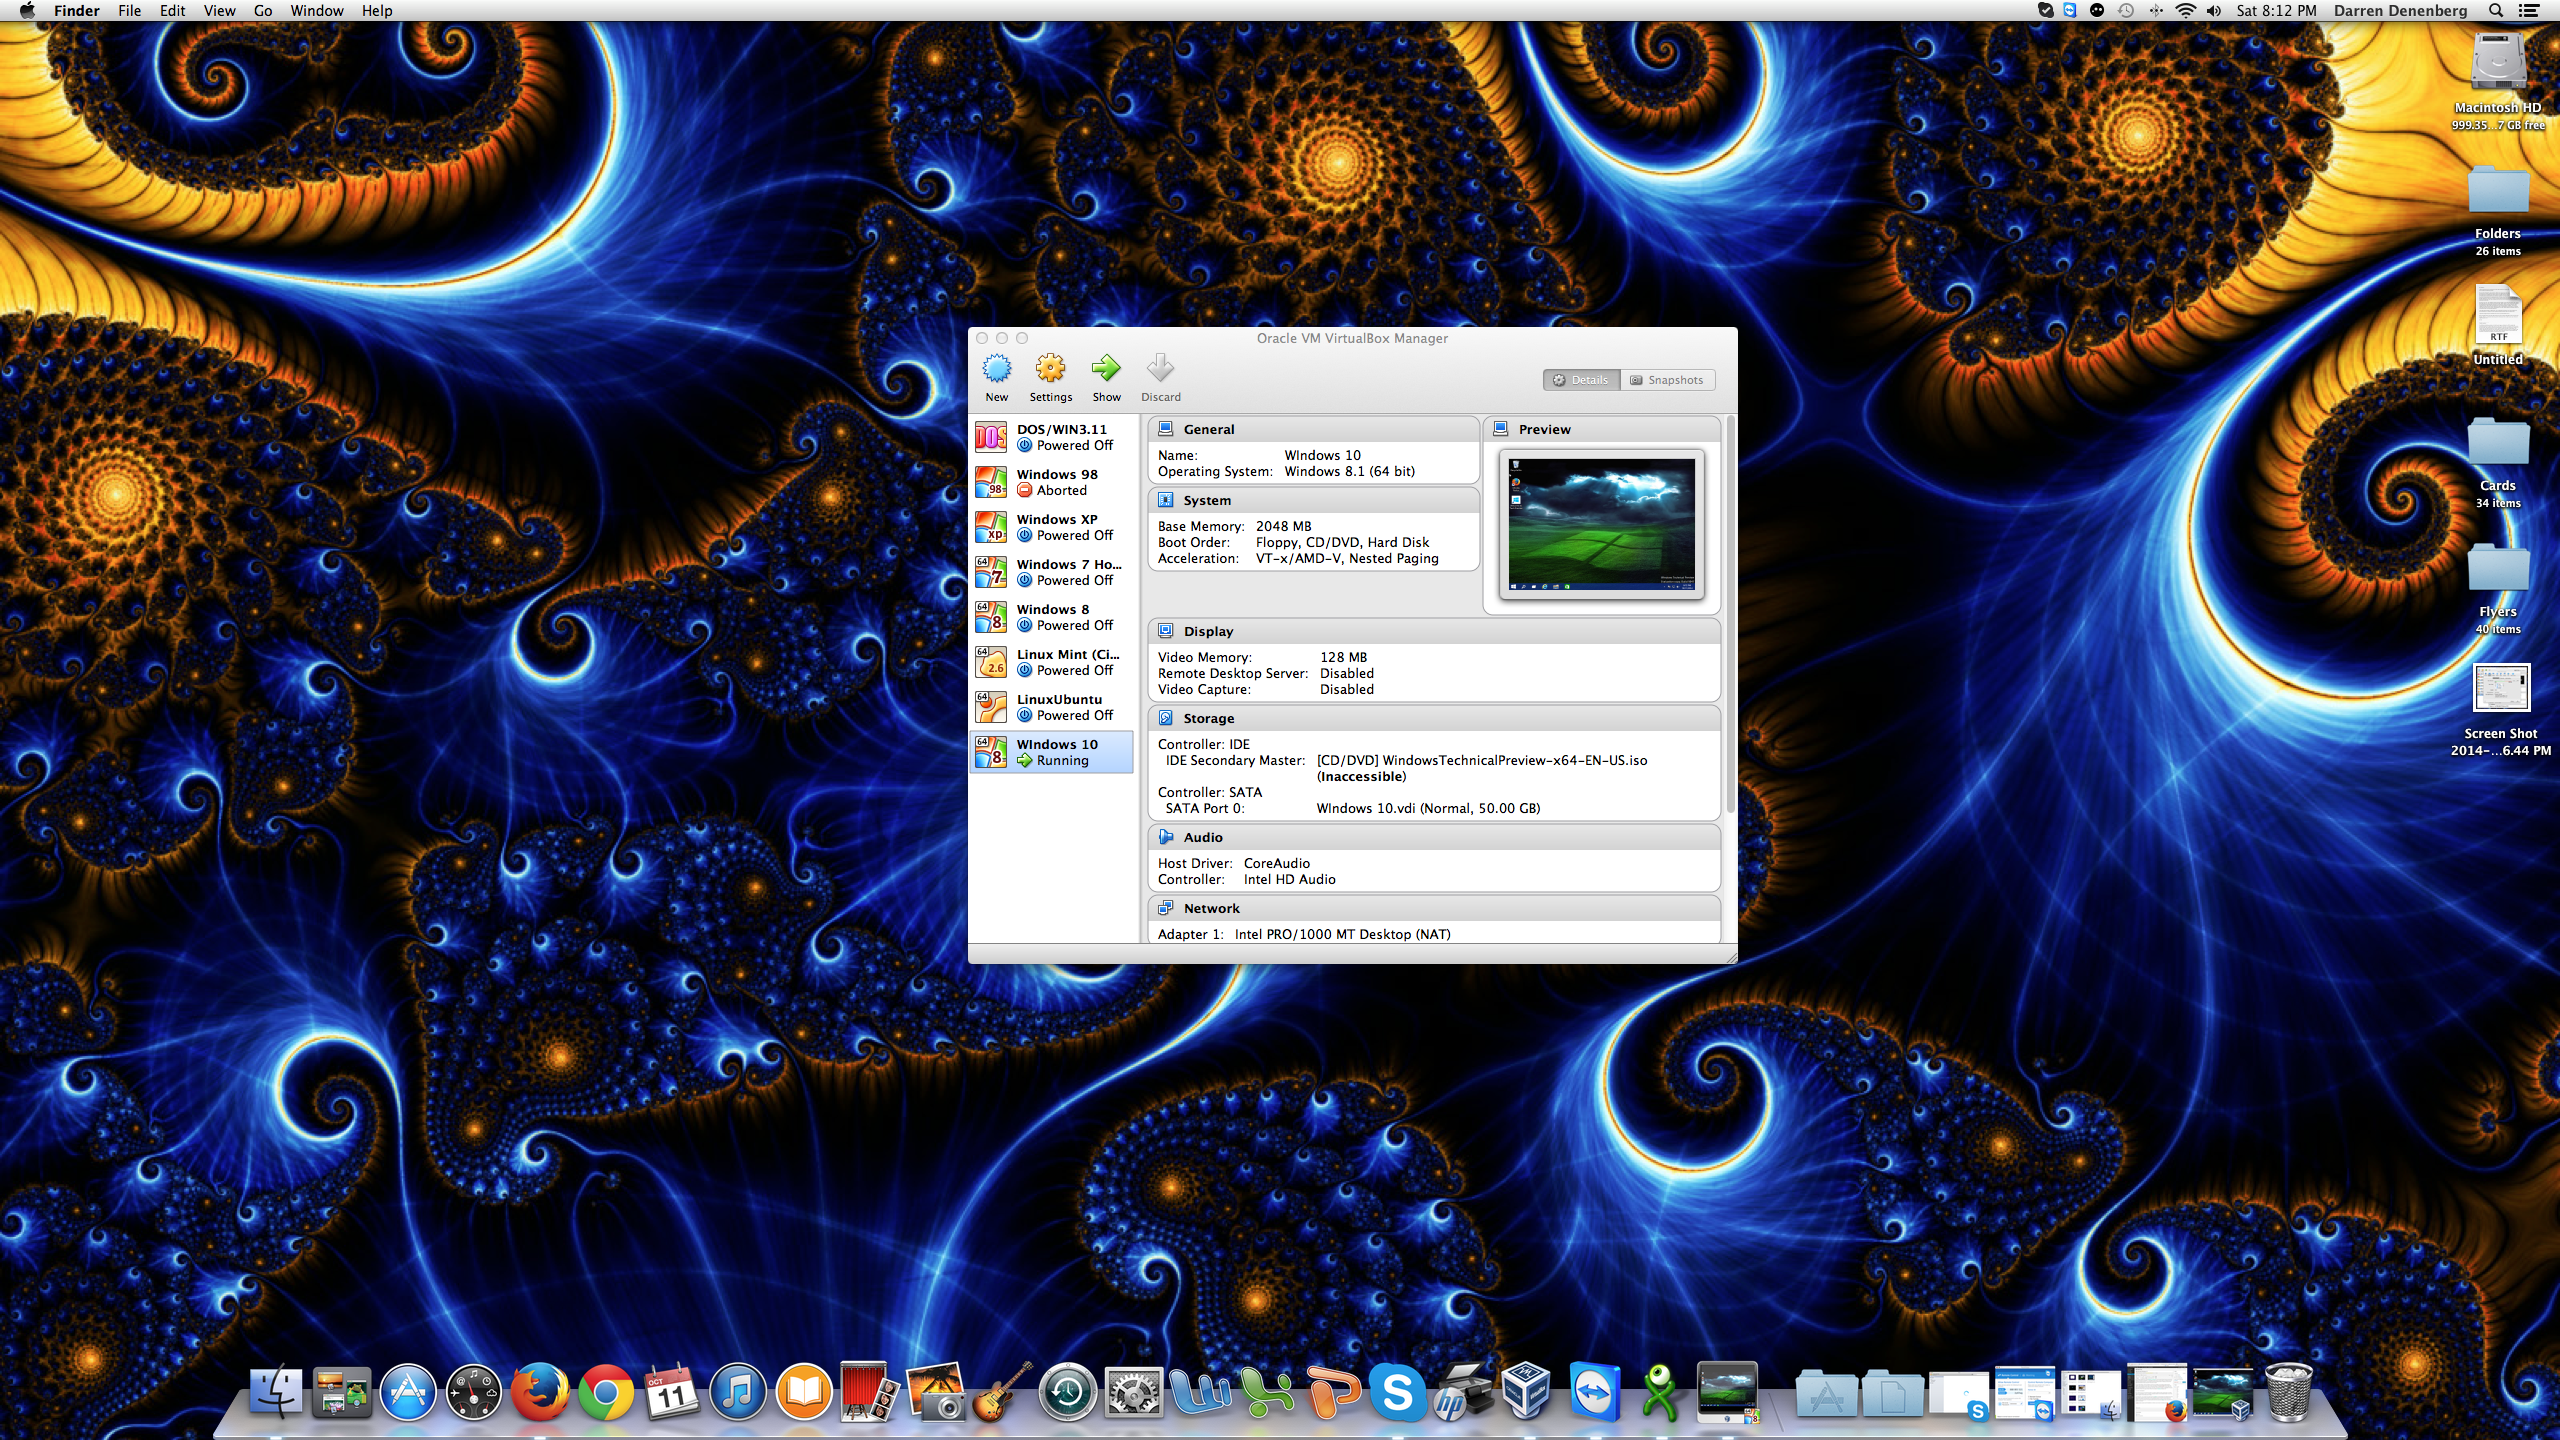 Oracle's VirtualBox running on my Mac